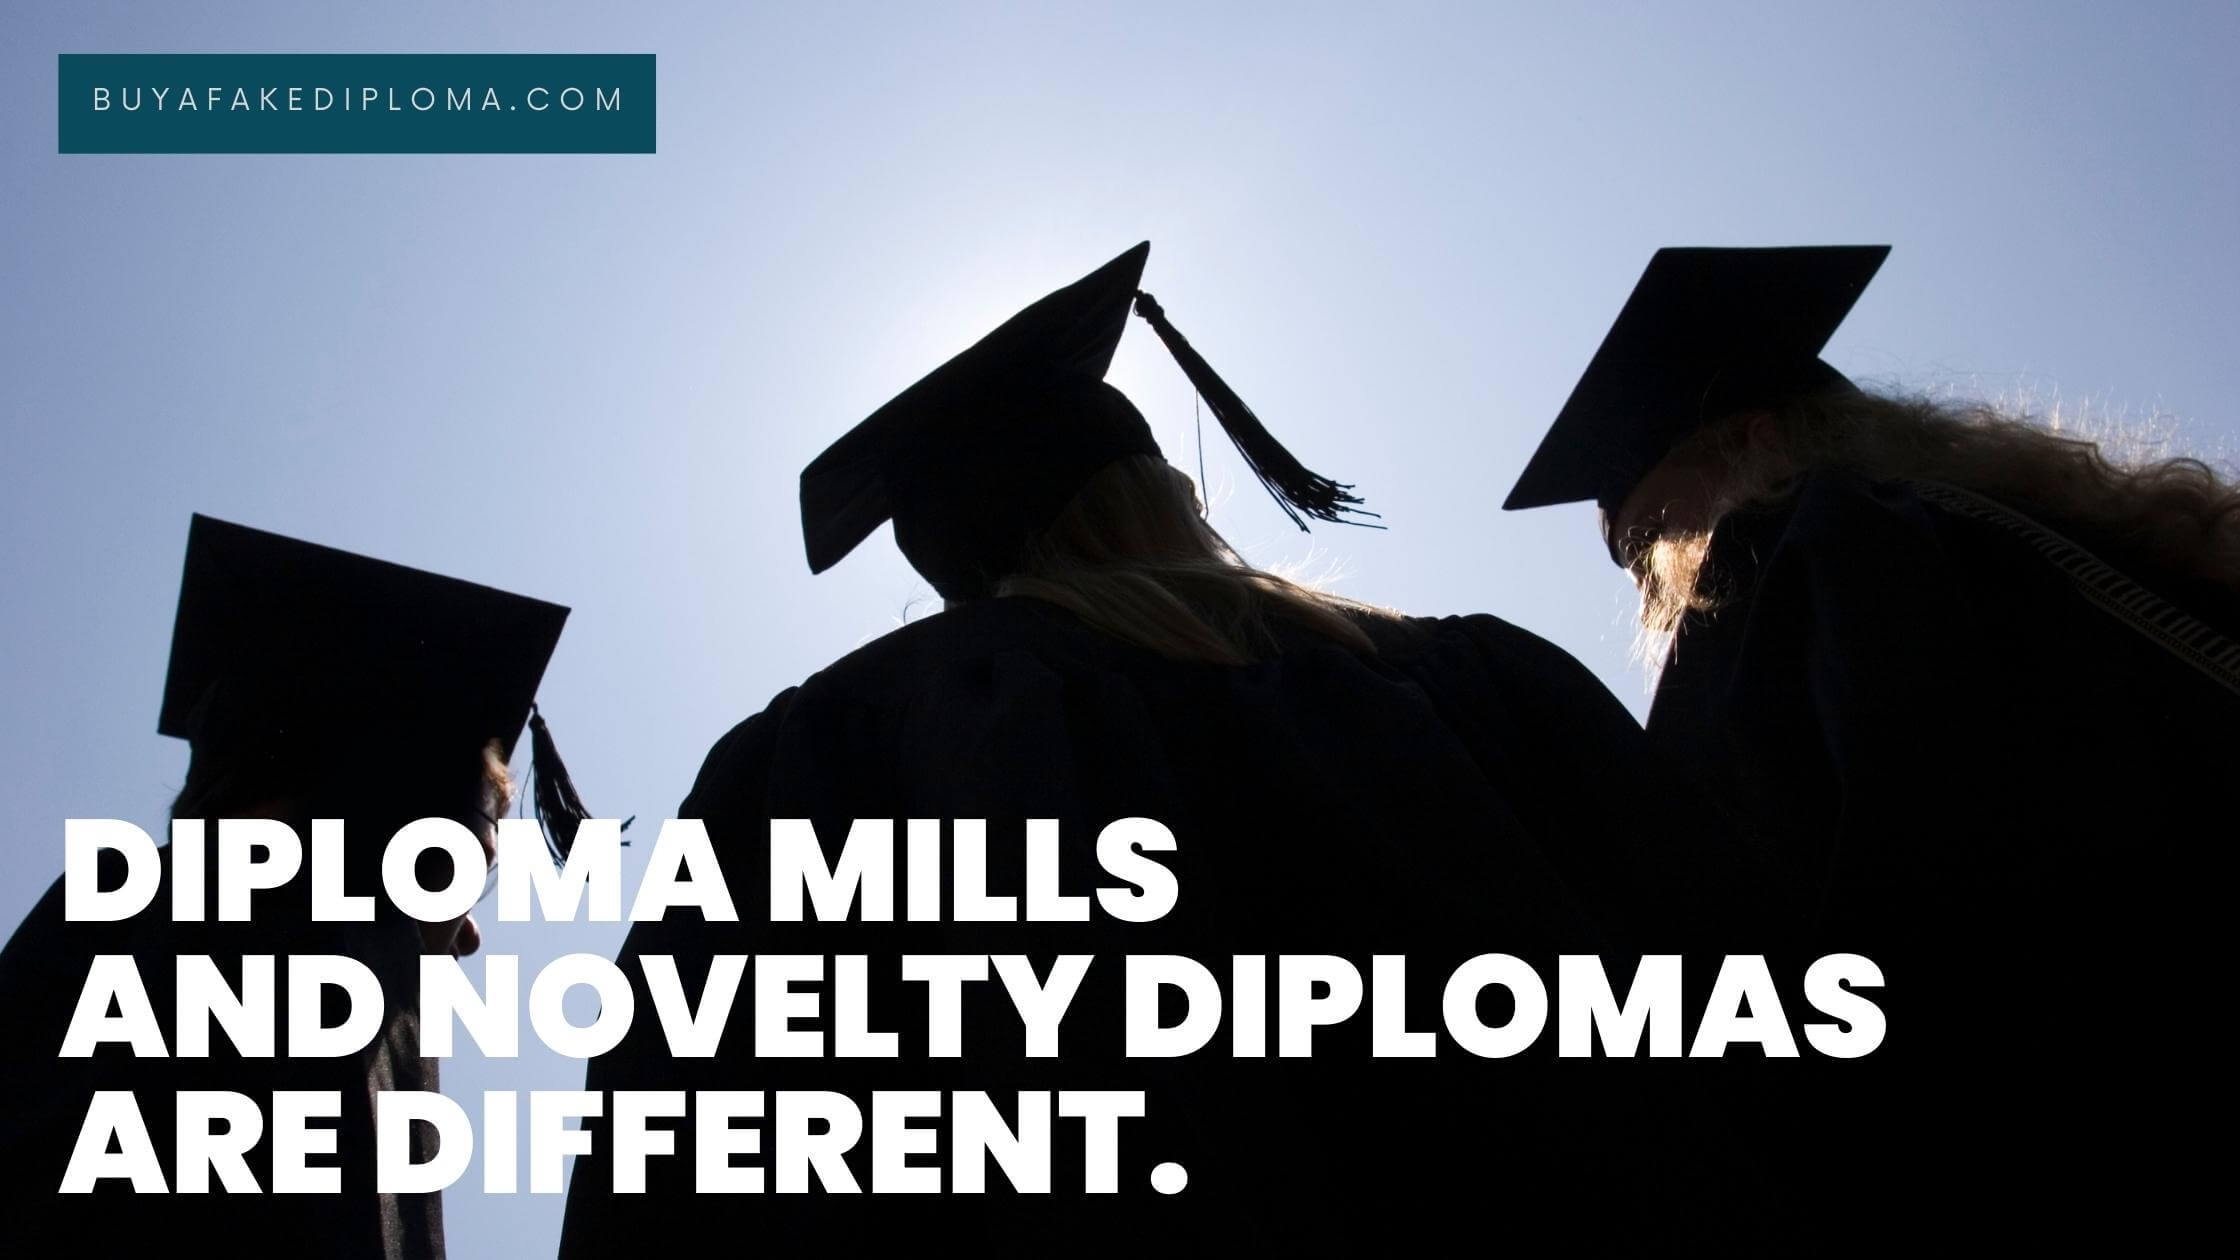 novelty diplomas and fake diplomas from mills are not the same